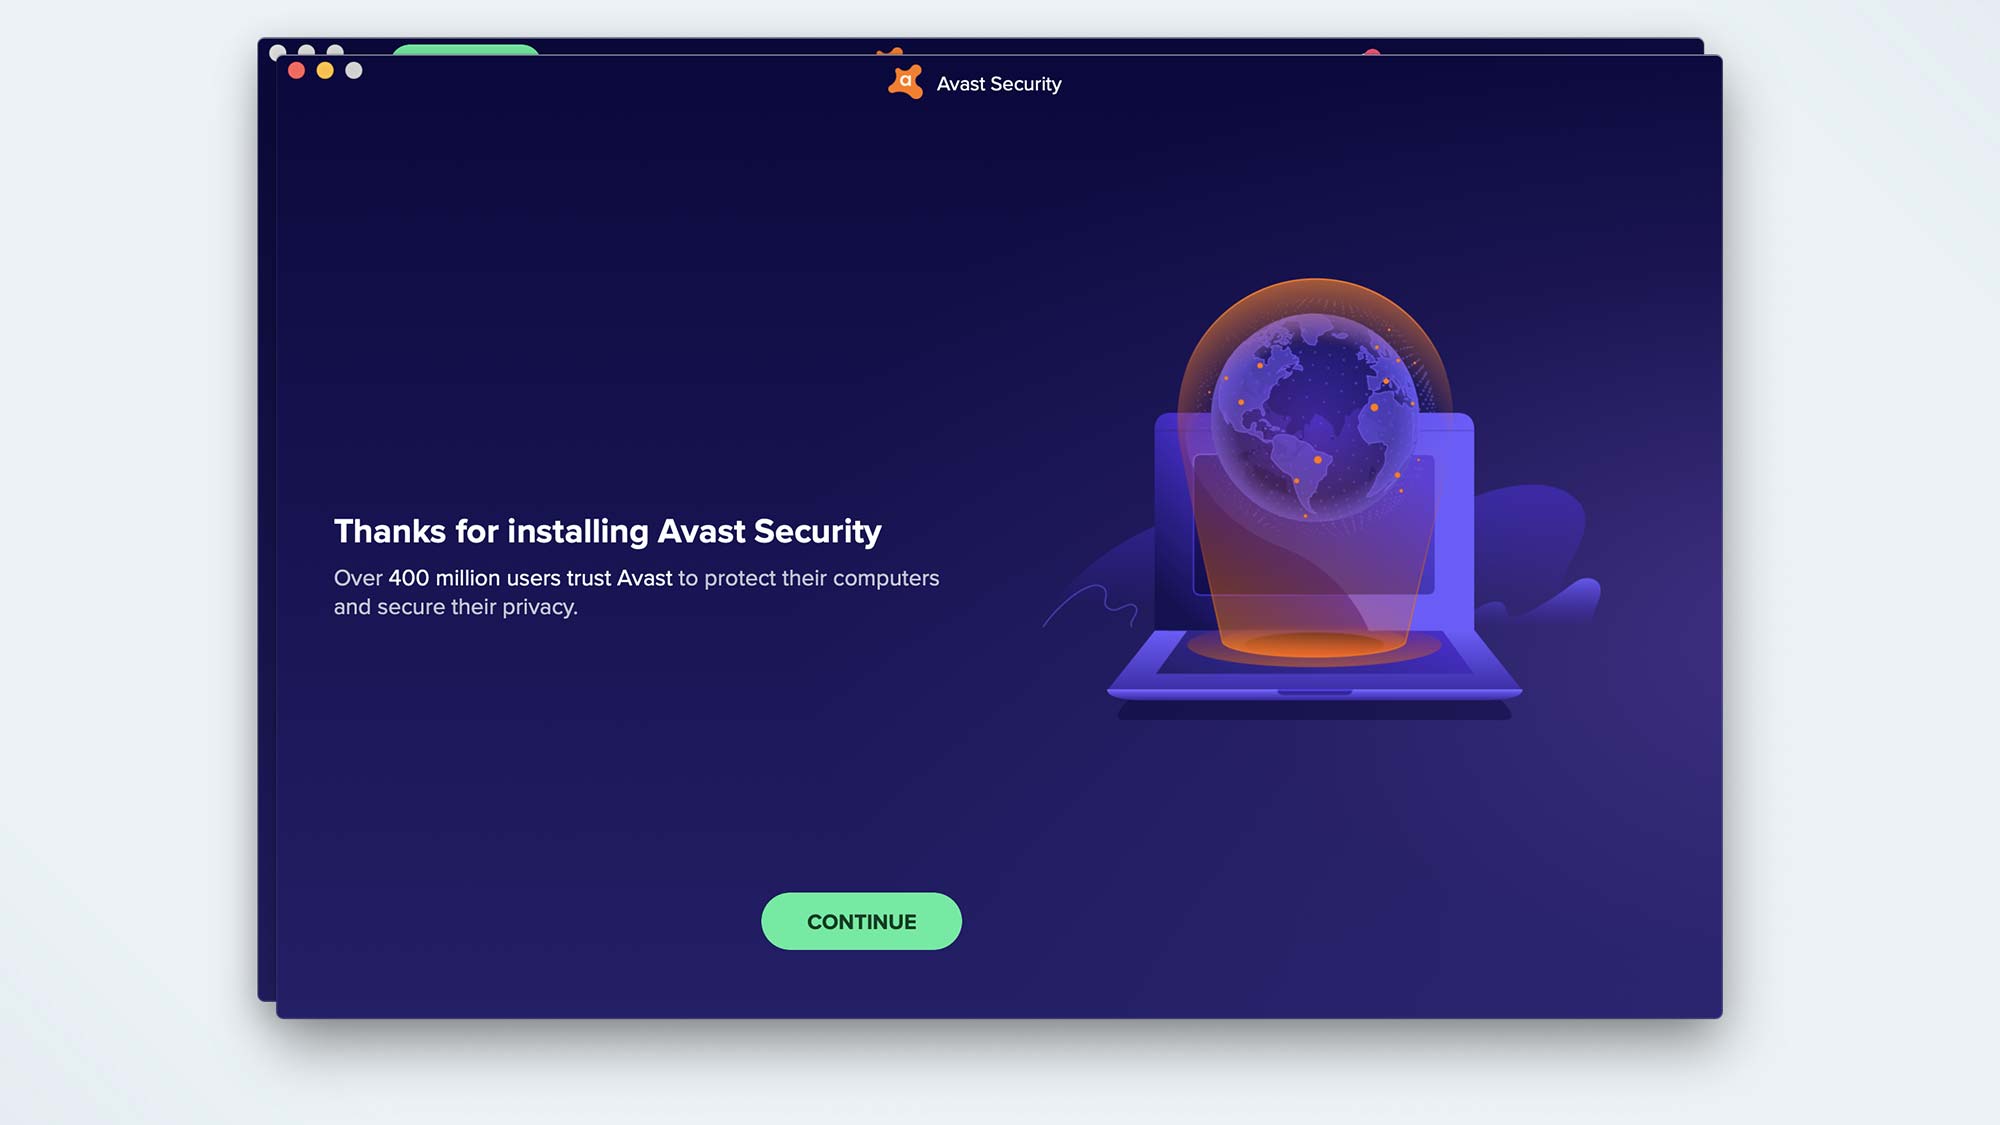 avast free mac security